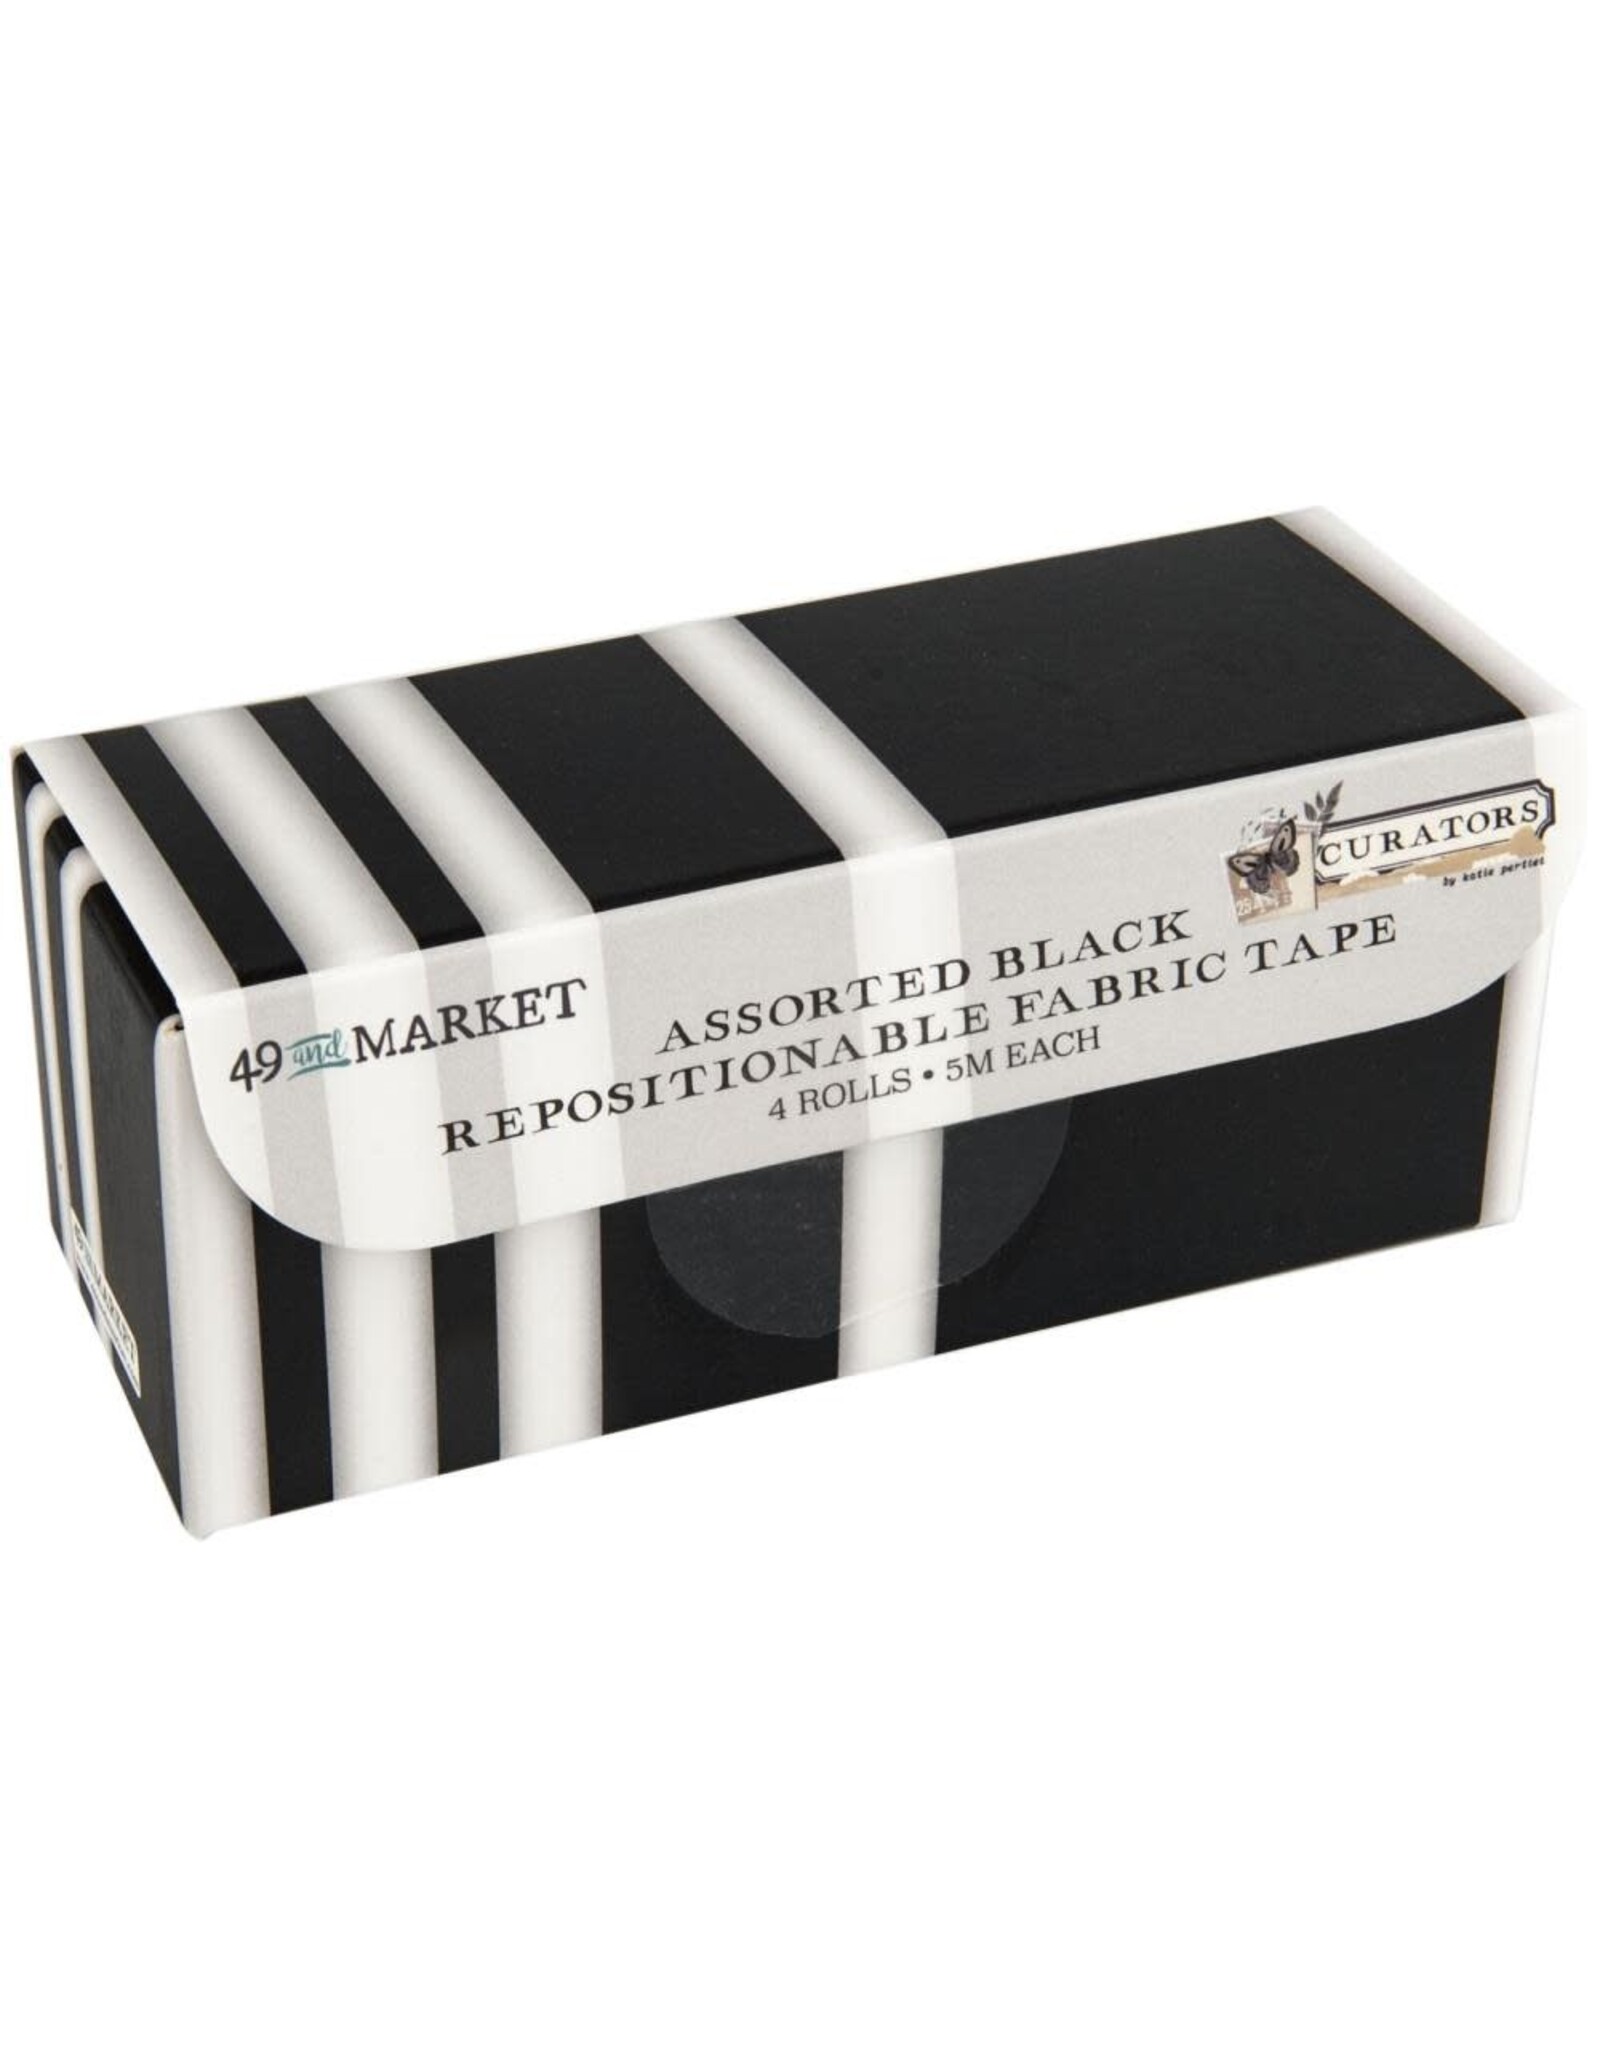 49 AND MARKET Curators Fabric Tape Set 4/Rolls - All Black Assortment